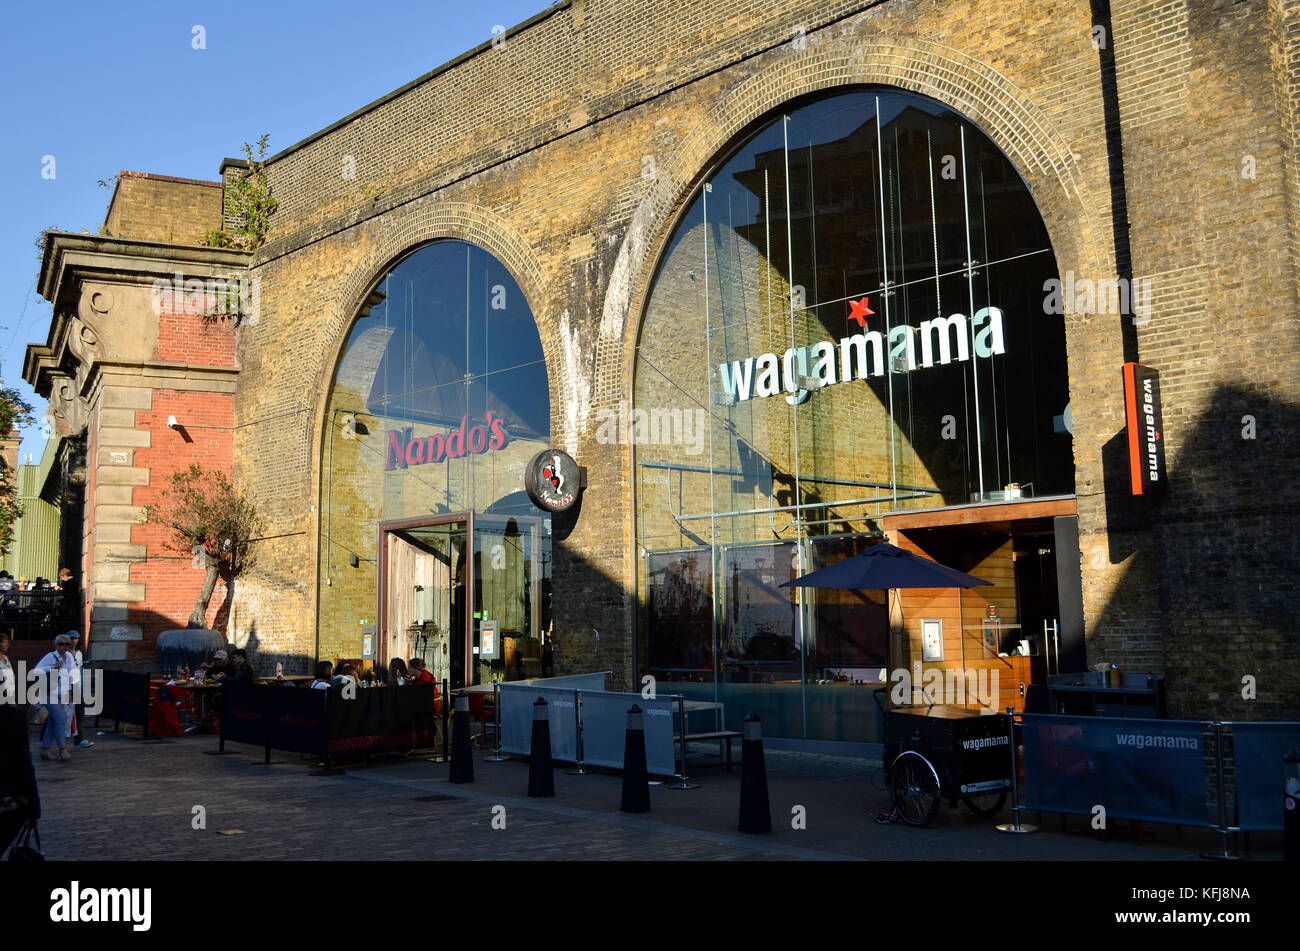 Nando's and Wagamama restaurants, Clink Street railway arches, London, UK. Stock Photo